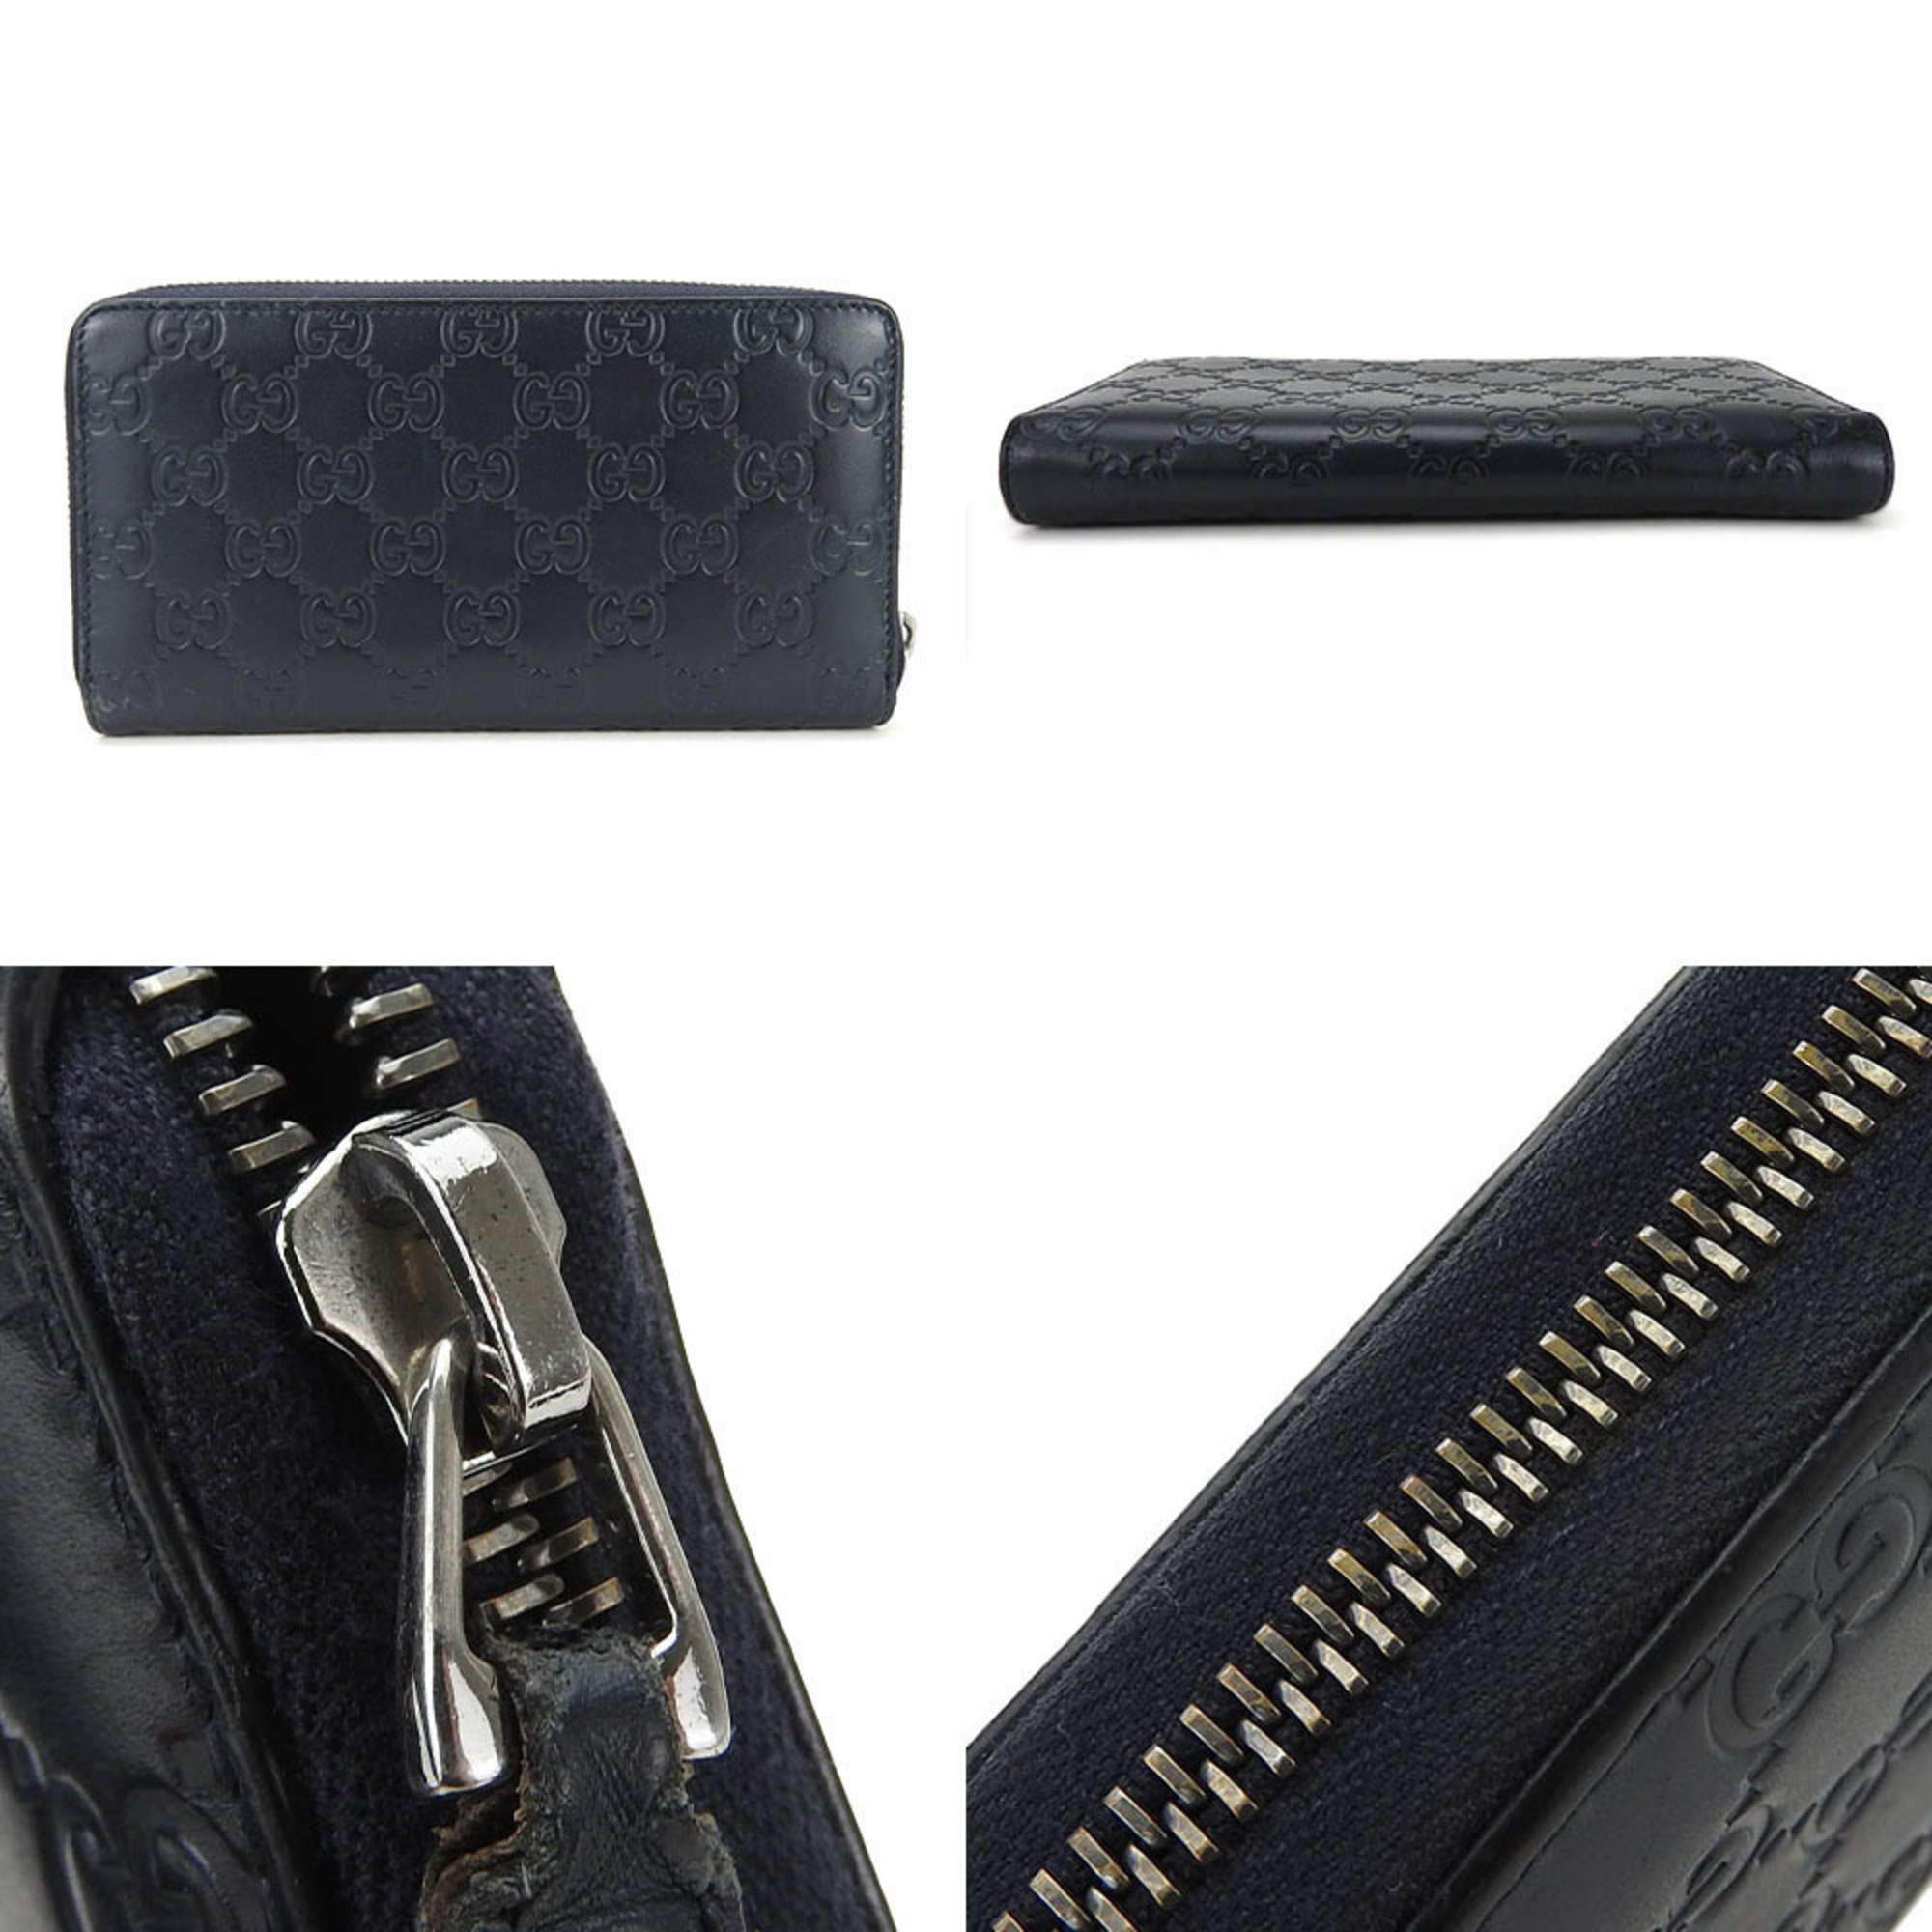 Gucci Round Long Wallet 307987 Guccisima GG Navy Leather Chic Accessories Women's Men's GUCCI Zip Around navy